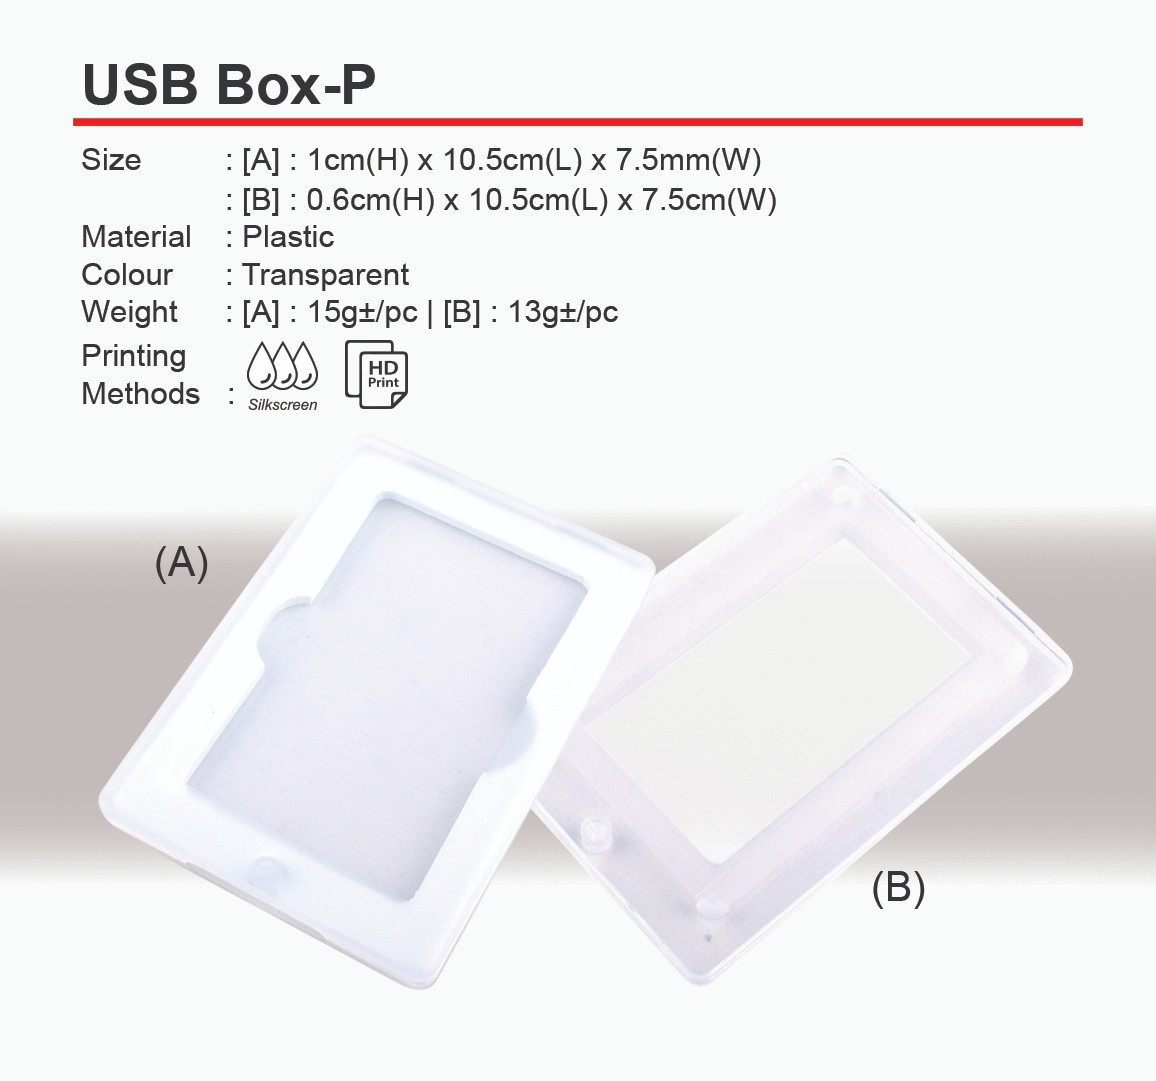 USB Box-P (A)